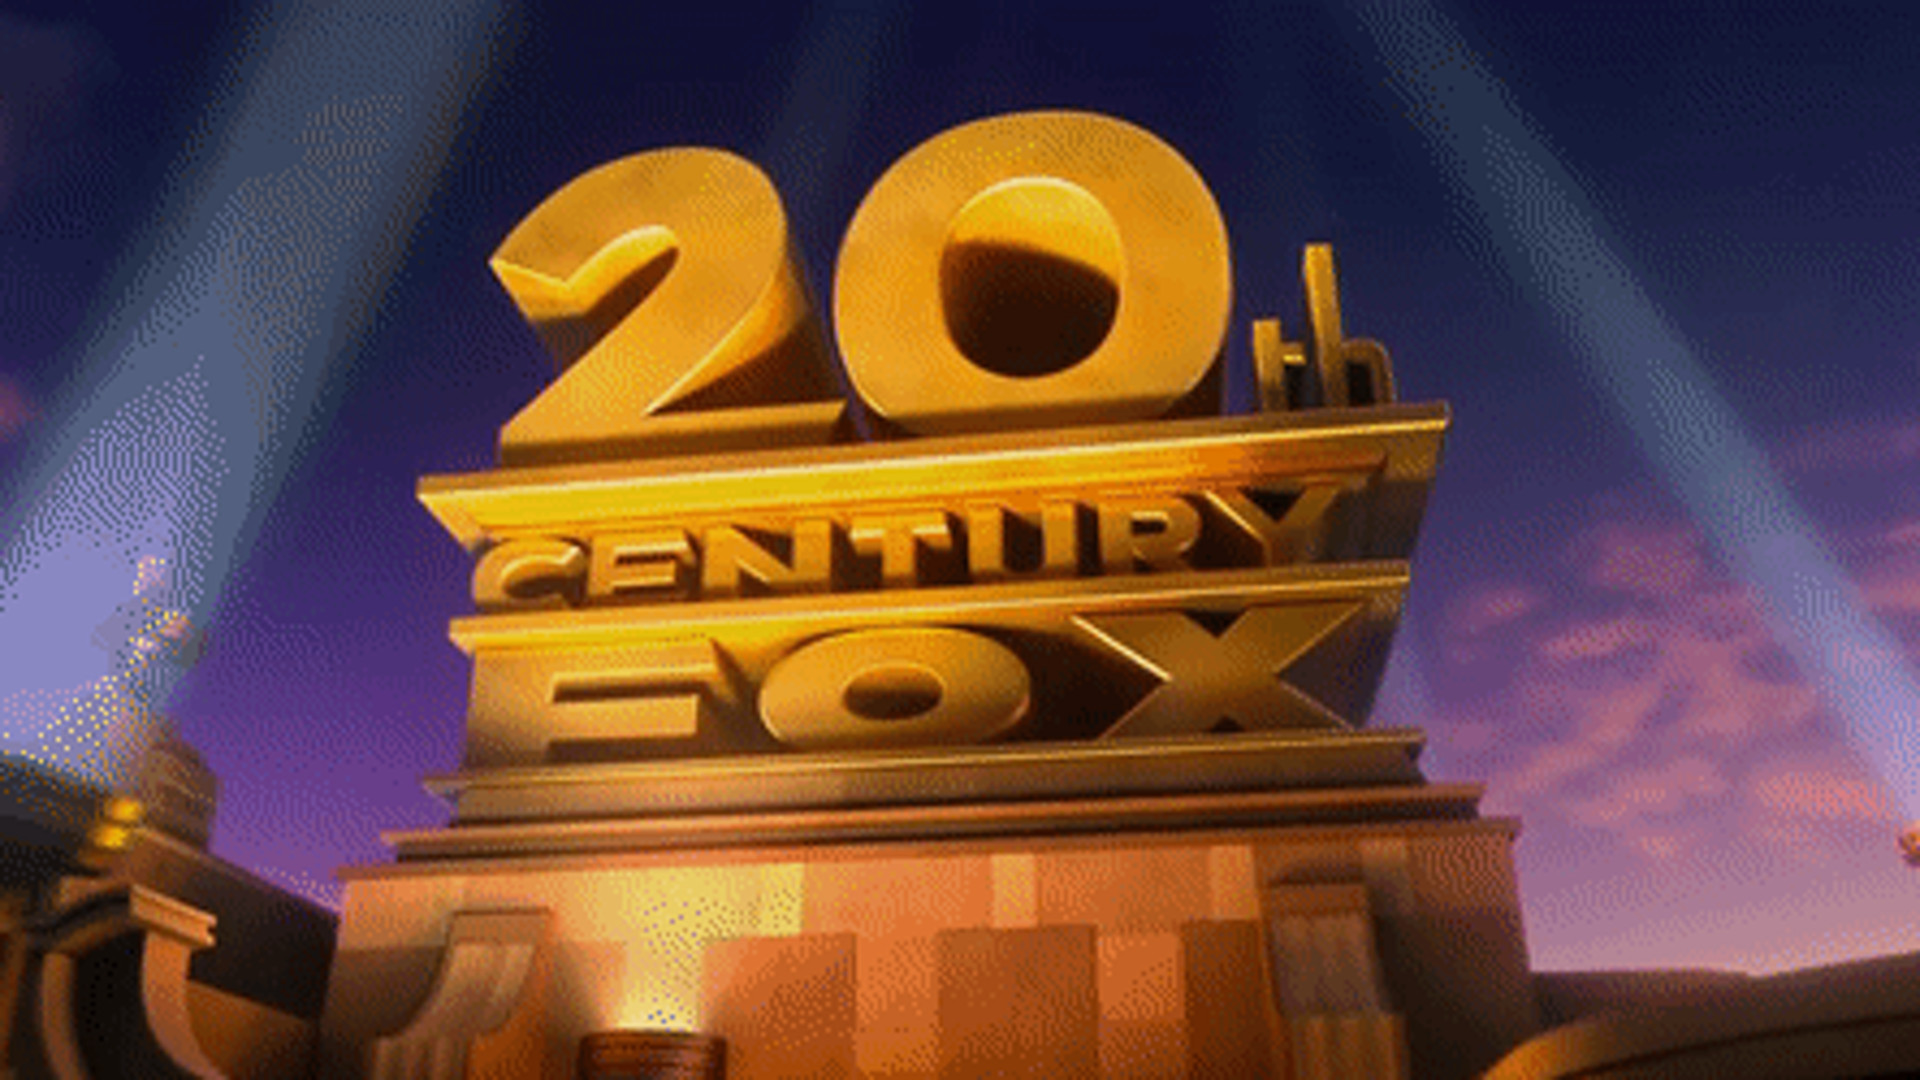 Дисней 20. 20 Век Центури Фокс. Студия 20th Century Fox. 20 Rh Century Fox. 20th Century Fox 2002.